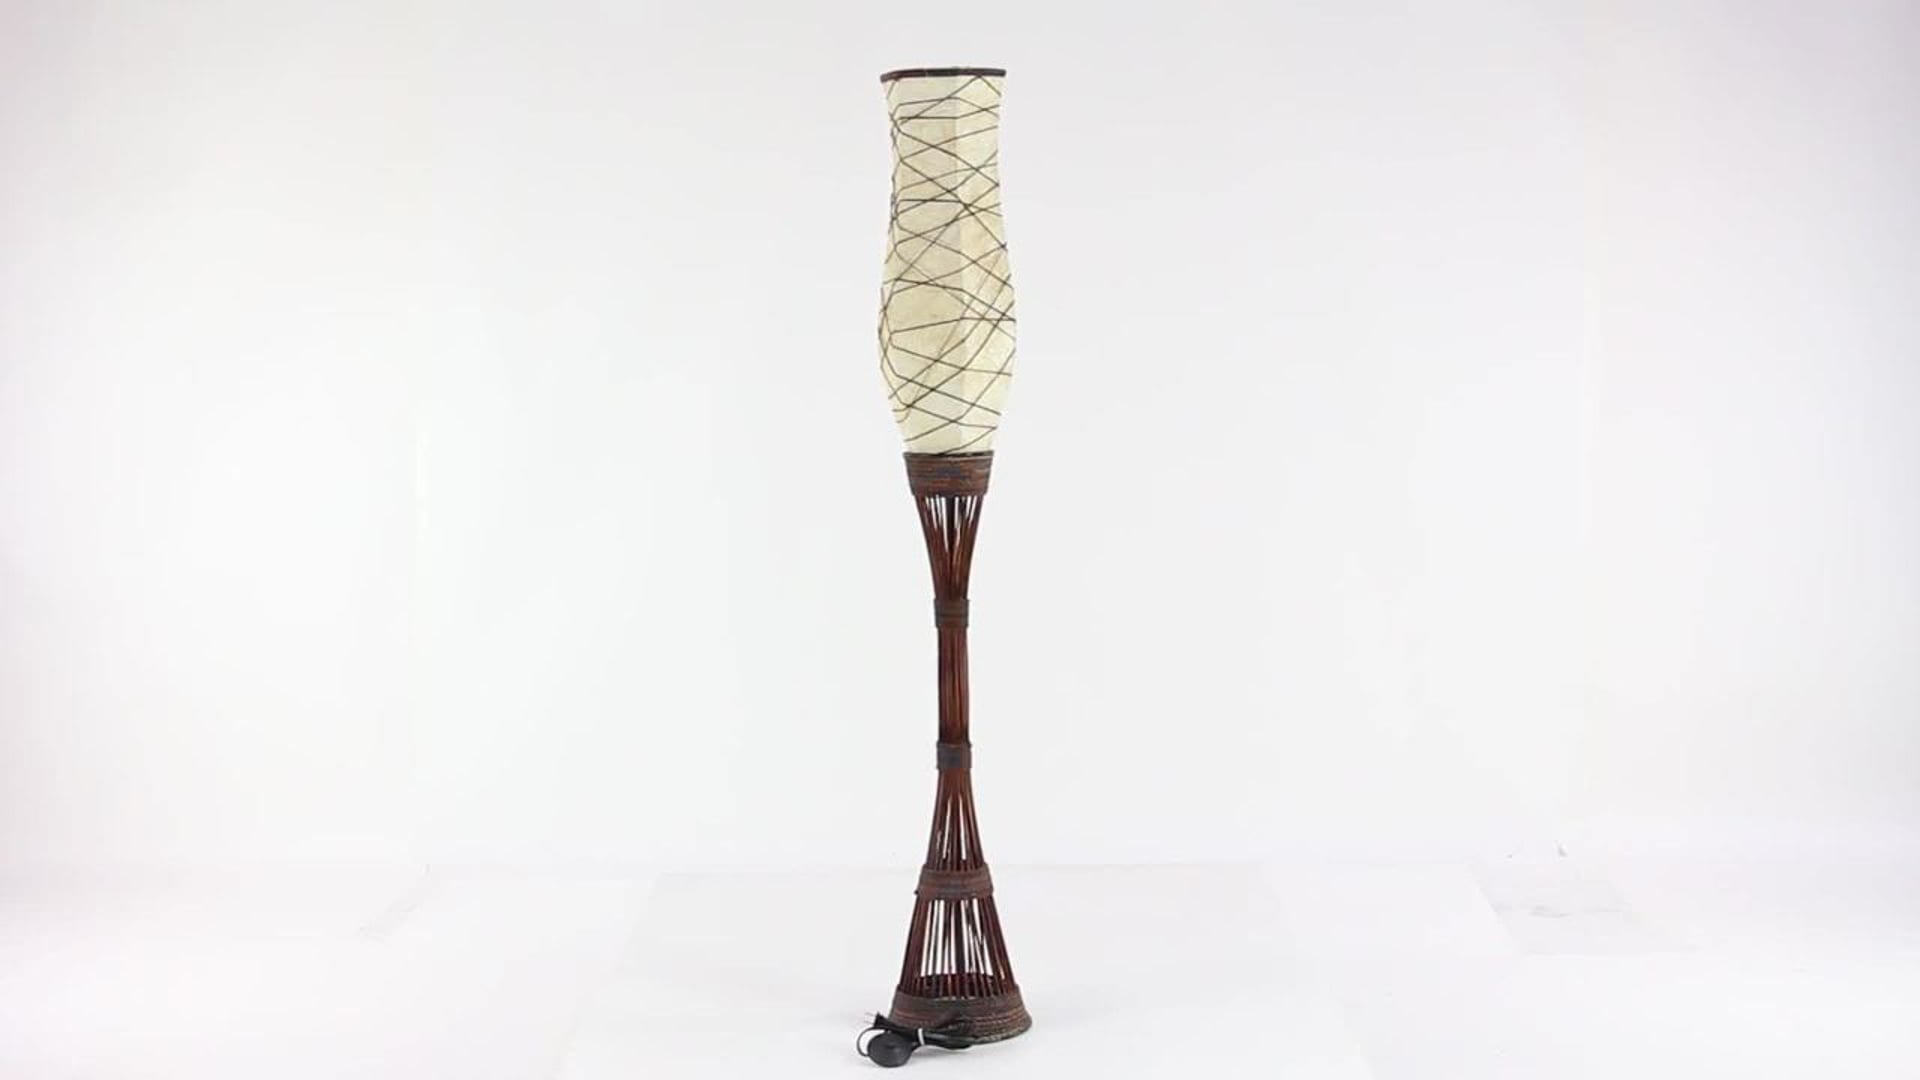 Traditional Brown Bamboo Wood Floor Lamp 58825